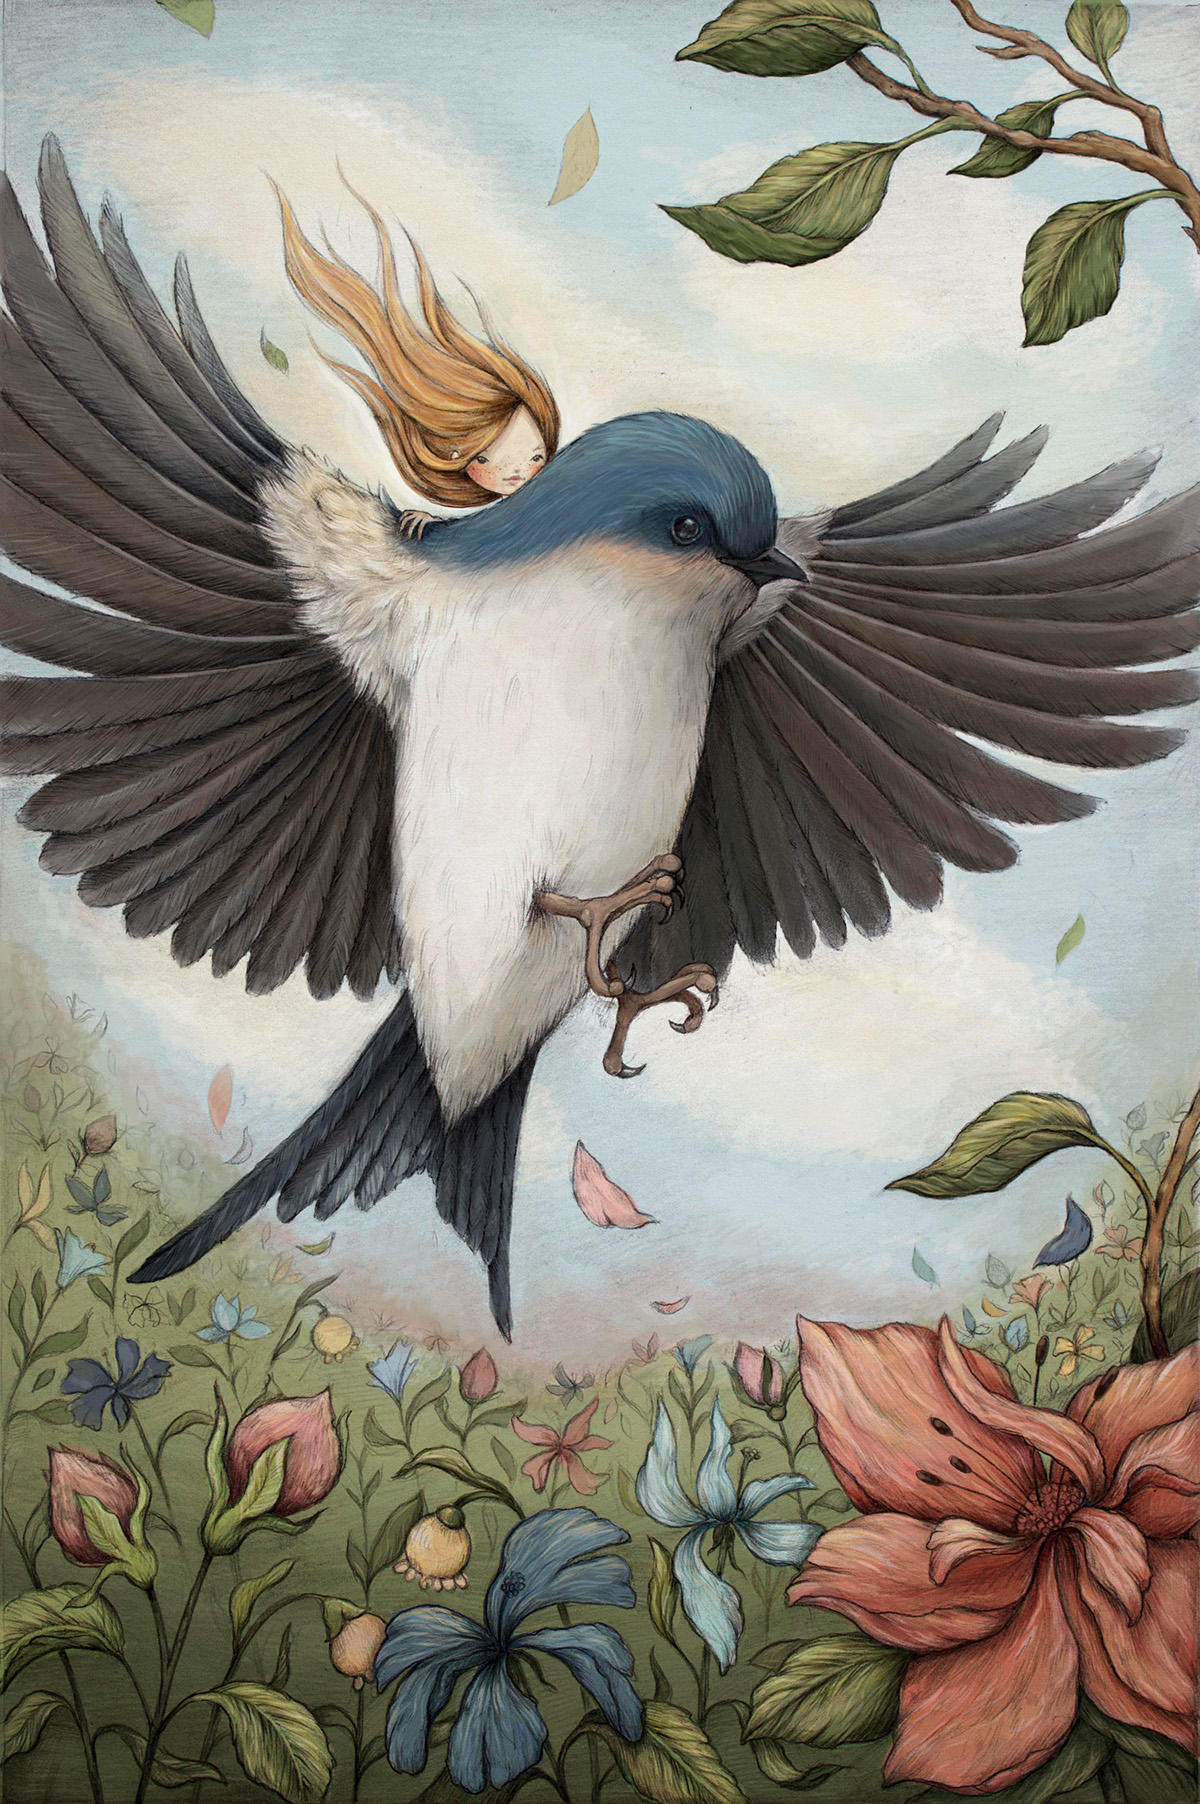 Thumbelina bird swallow story fairytale animals Nature girl andersen little cute kids Flowers